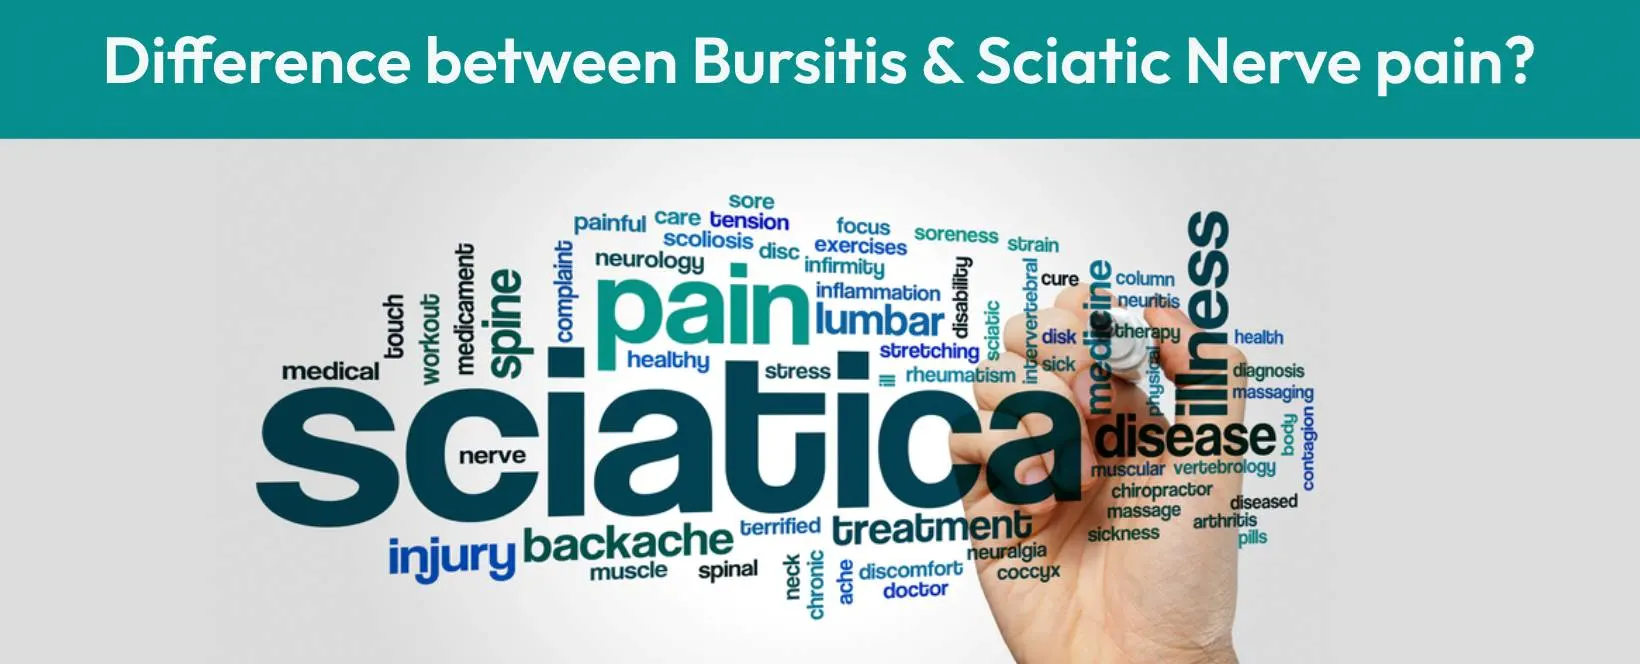 Difference between Bursitis & Sciatic Nerve Pain